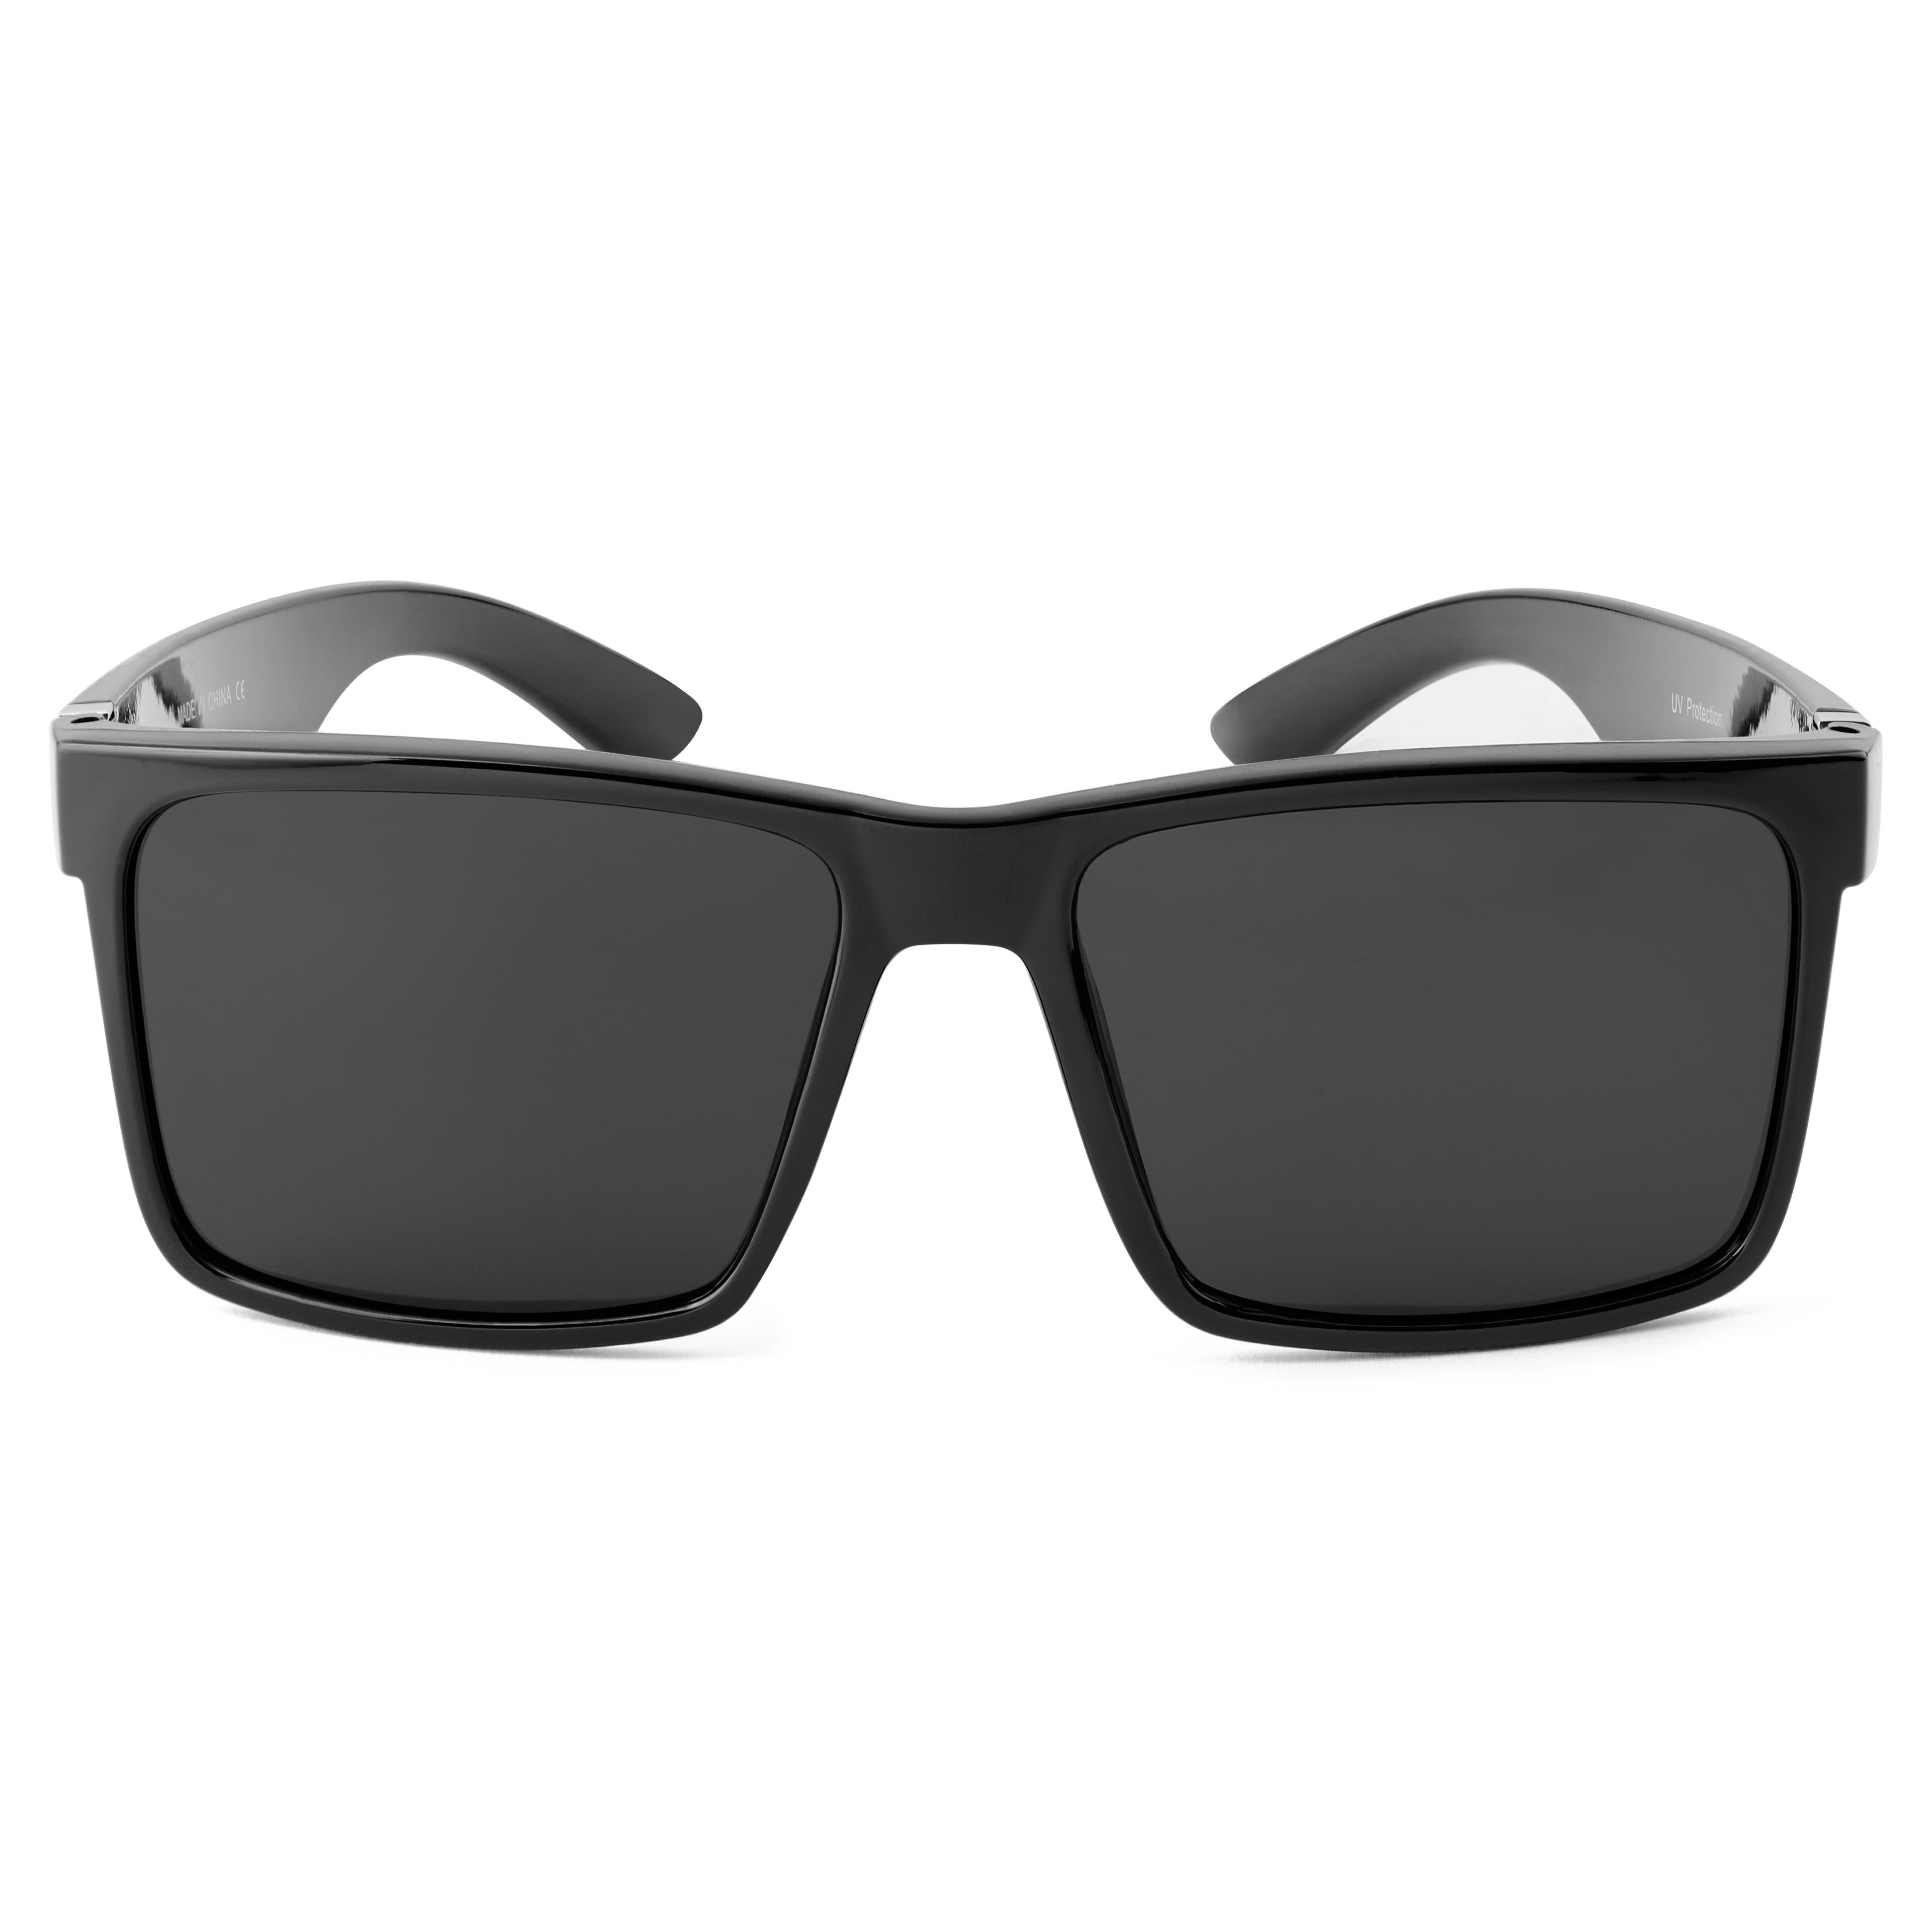 Black & Grey Polarised Sunglasses, In stock!